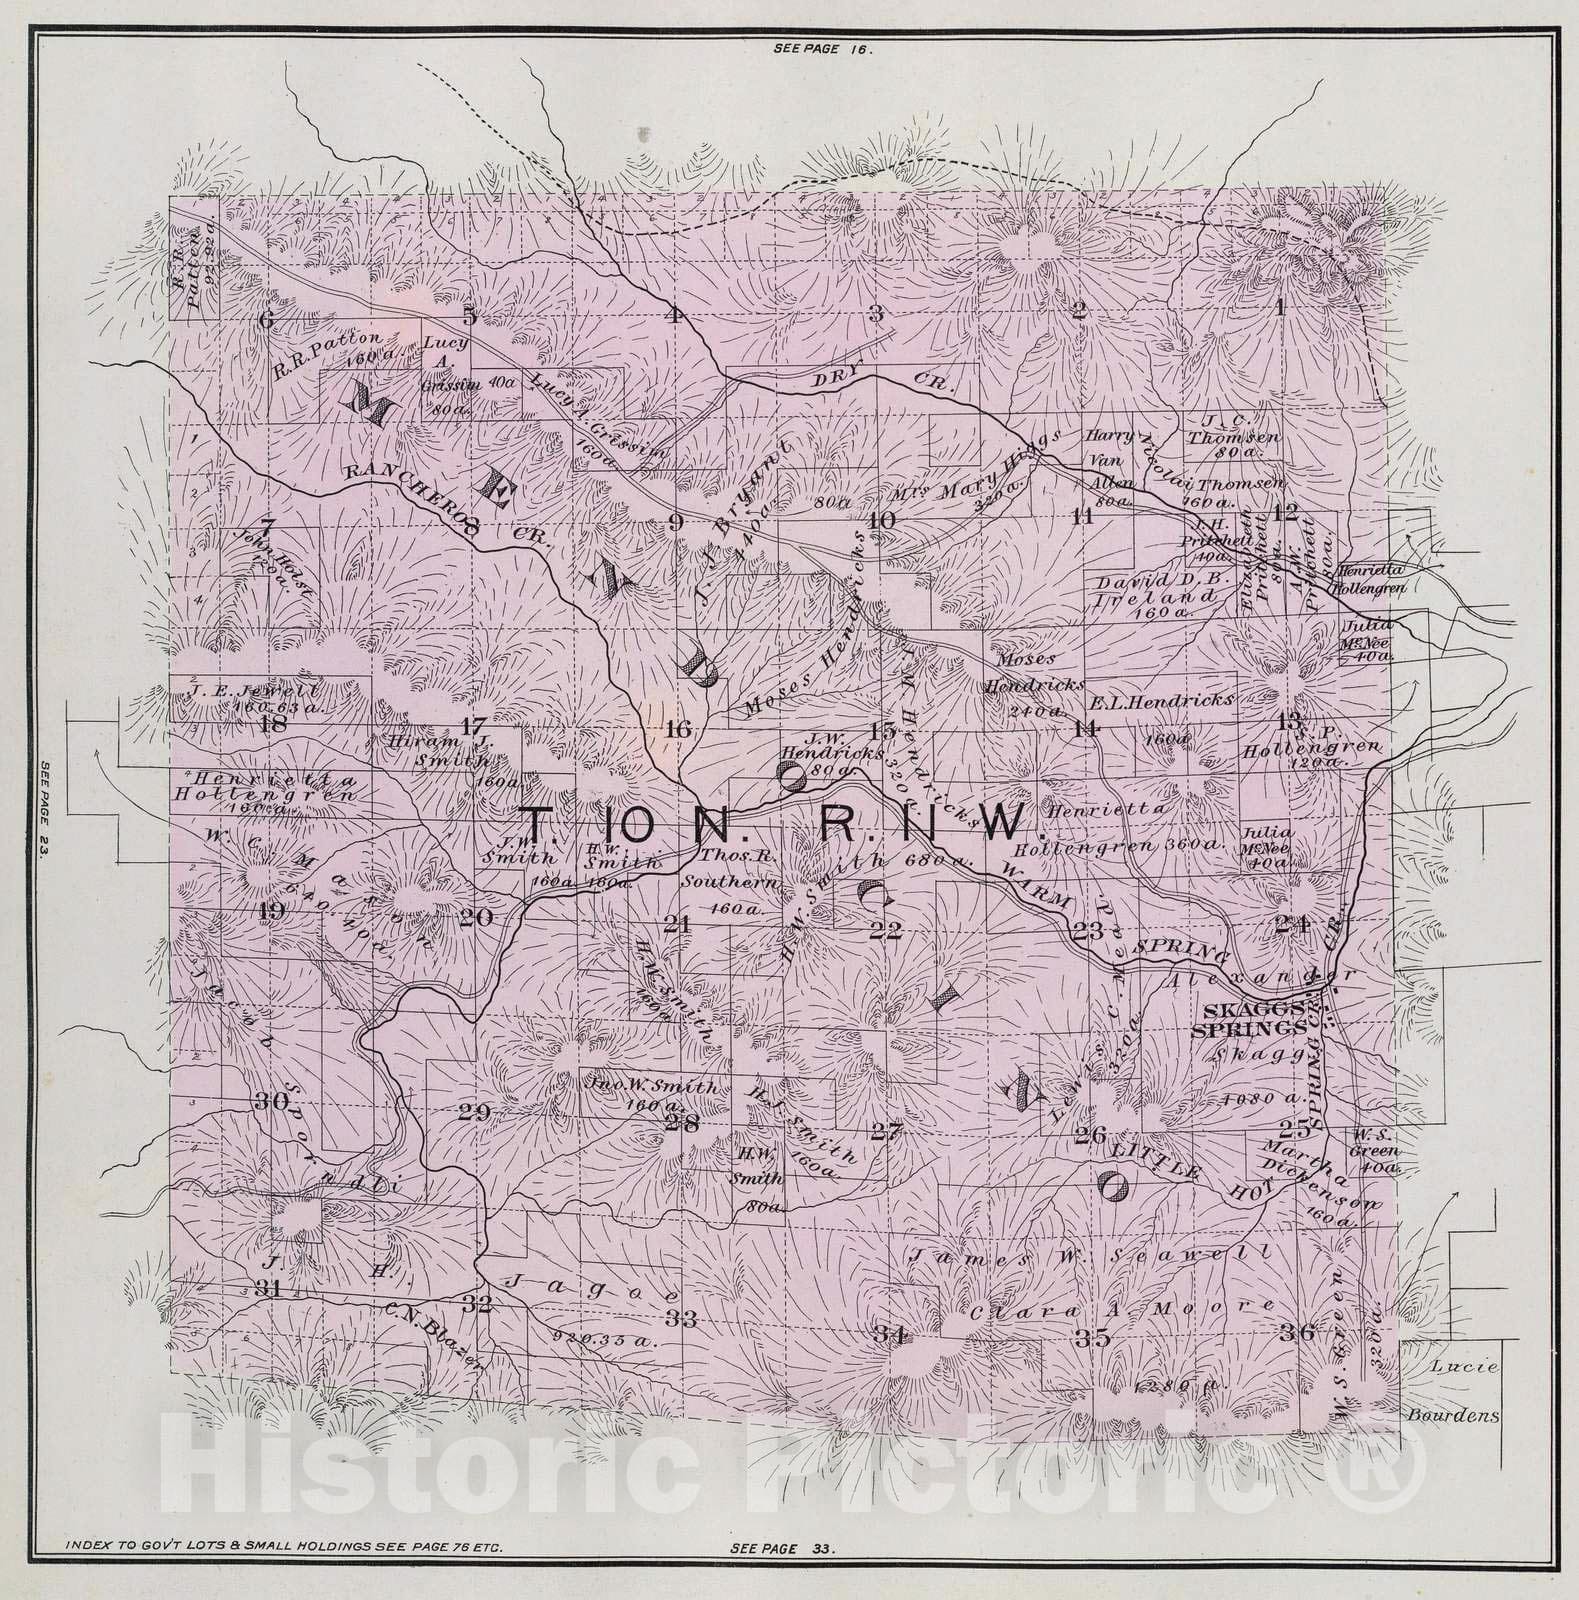 Historic Map : 1898 10 N, 11 W. - Vintage Wall Art